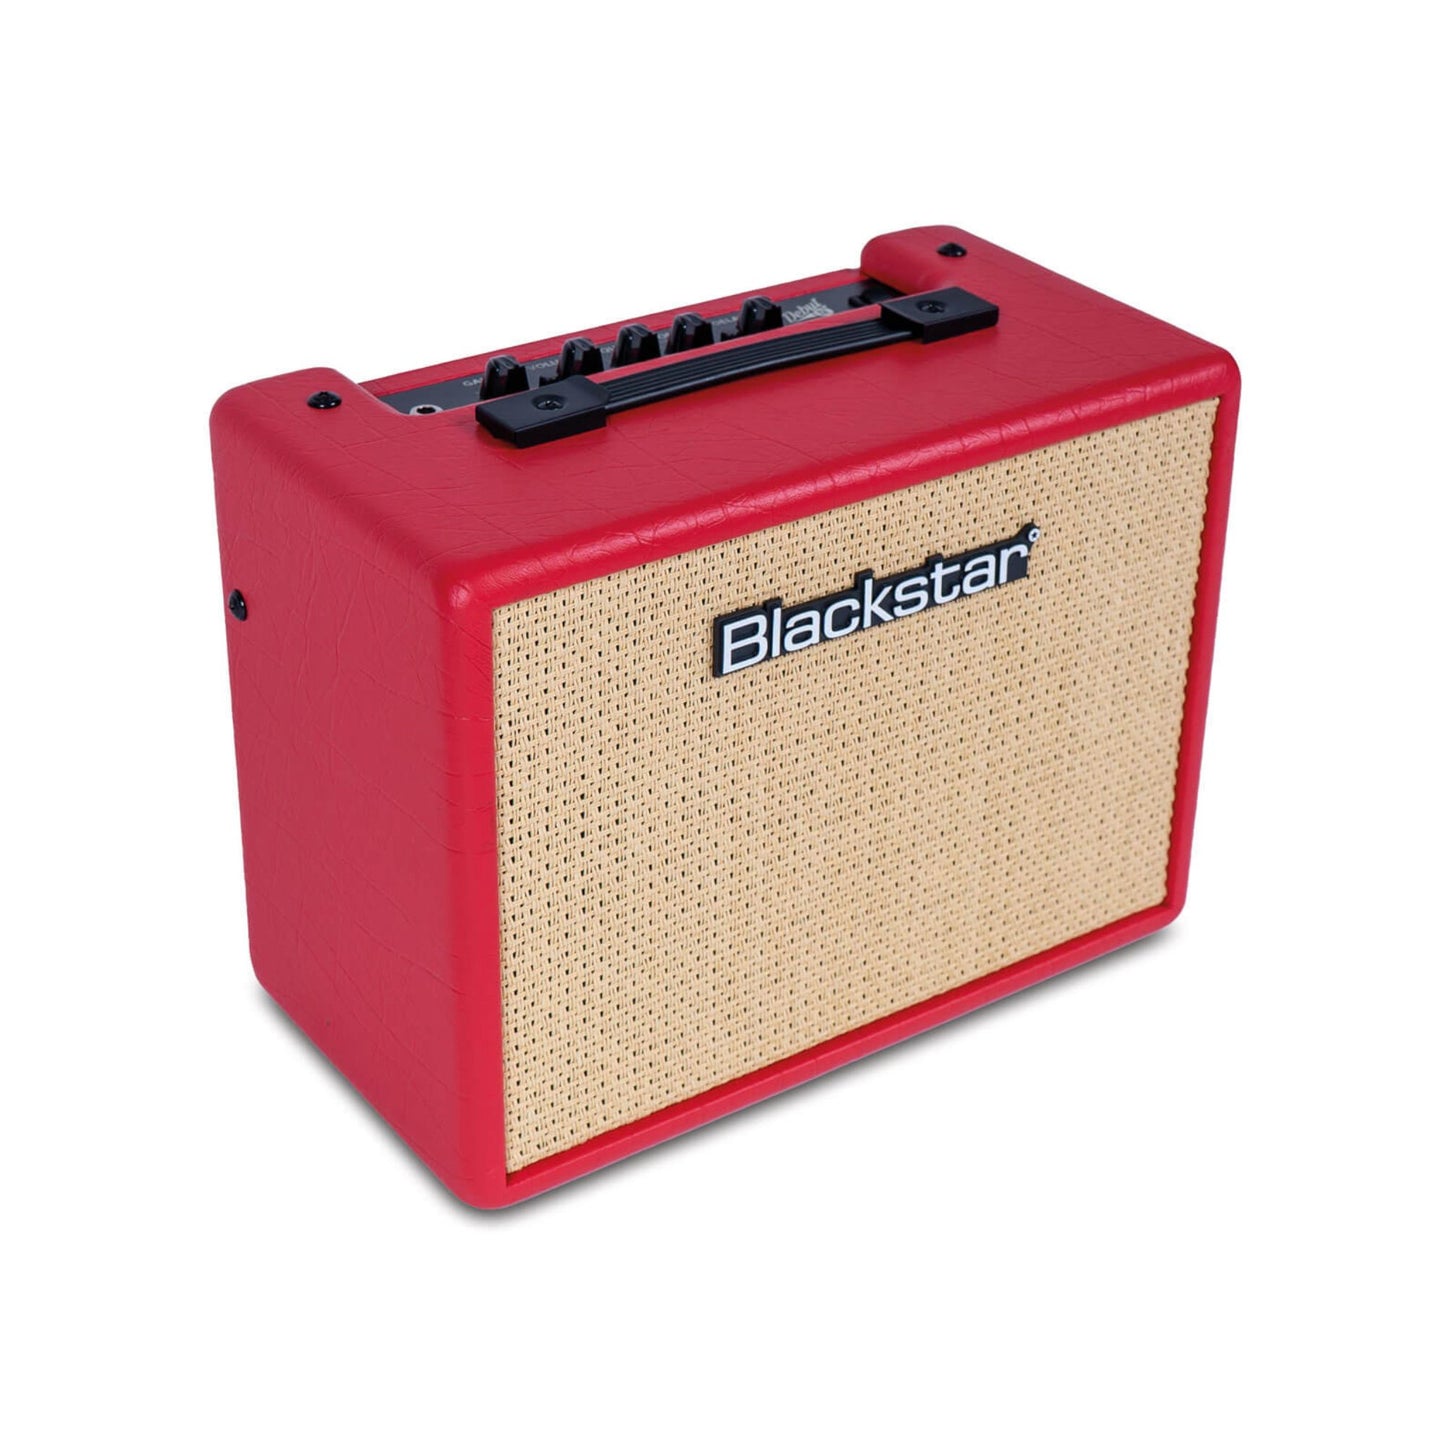 Blackstar Debut 15 Watt Guitar Amplifier Red